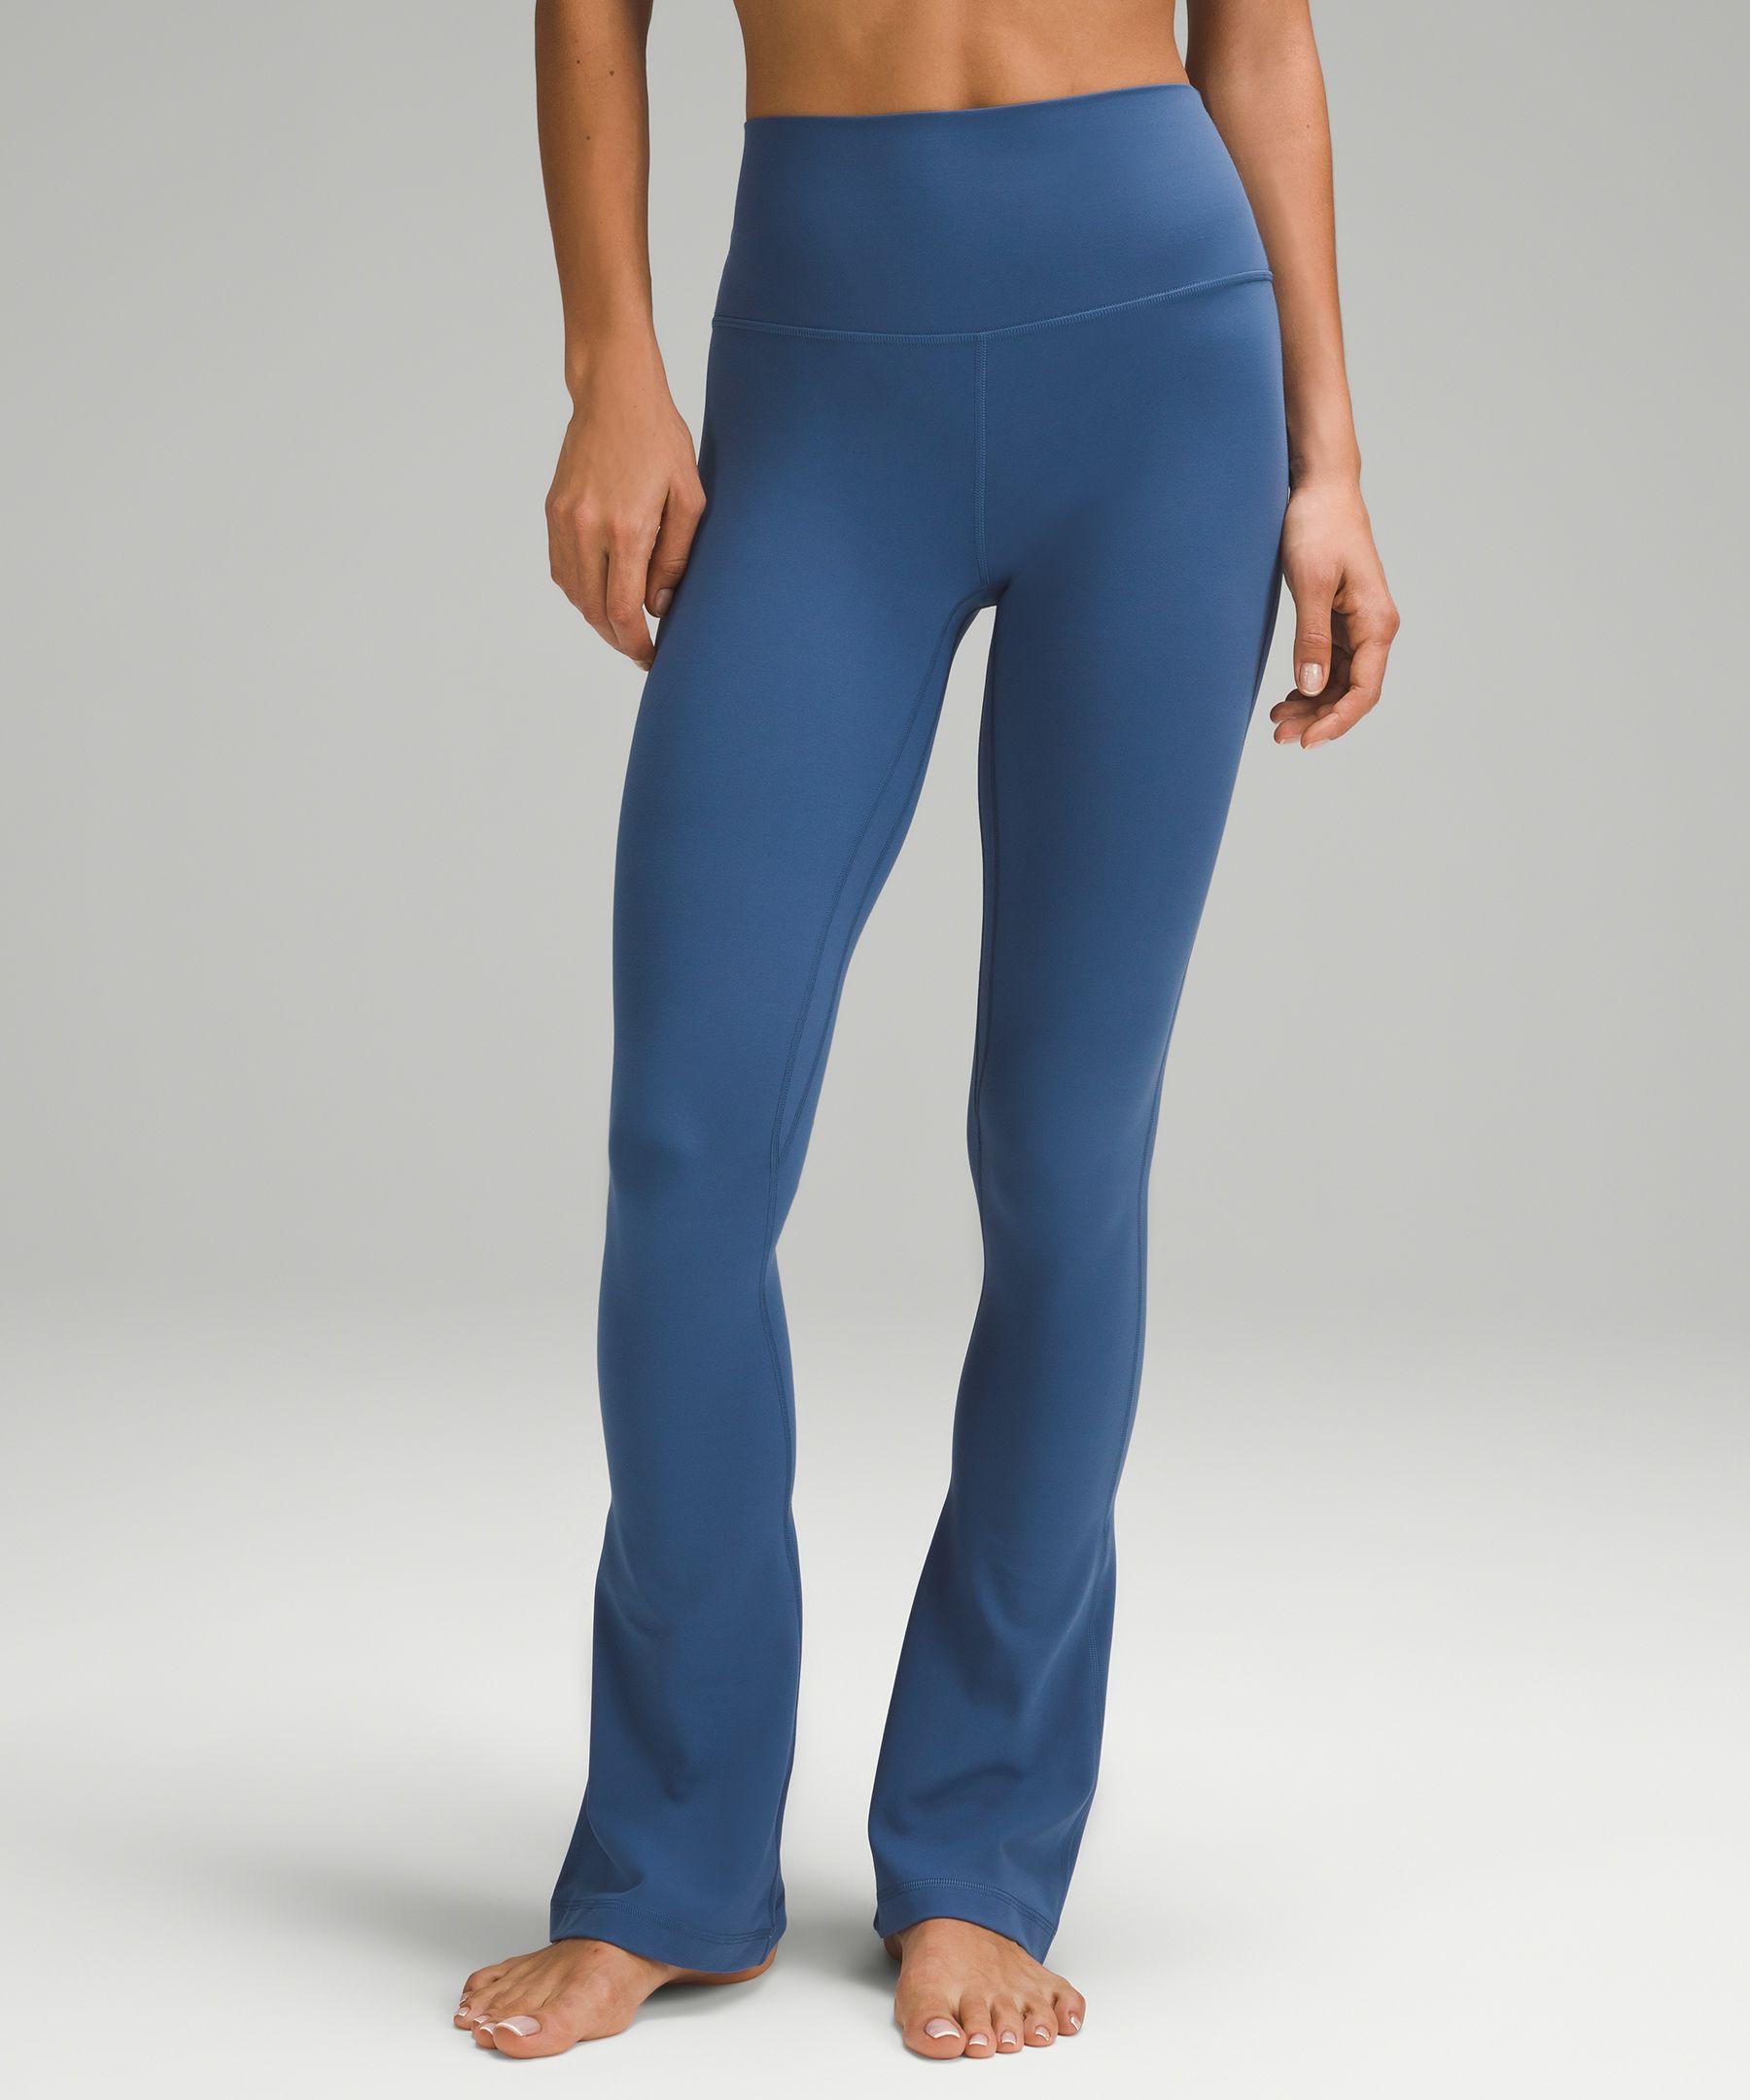 https://cdna.lystit.com/photos/lululemon/b0bb64a9/lululemon-athletica-designer-Pitch-Blue-Align-High-rise-Mini-flared-Pants-Regular-Color-Blue-Size-2.jpeg